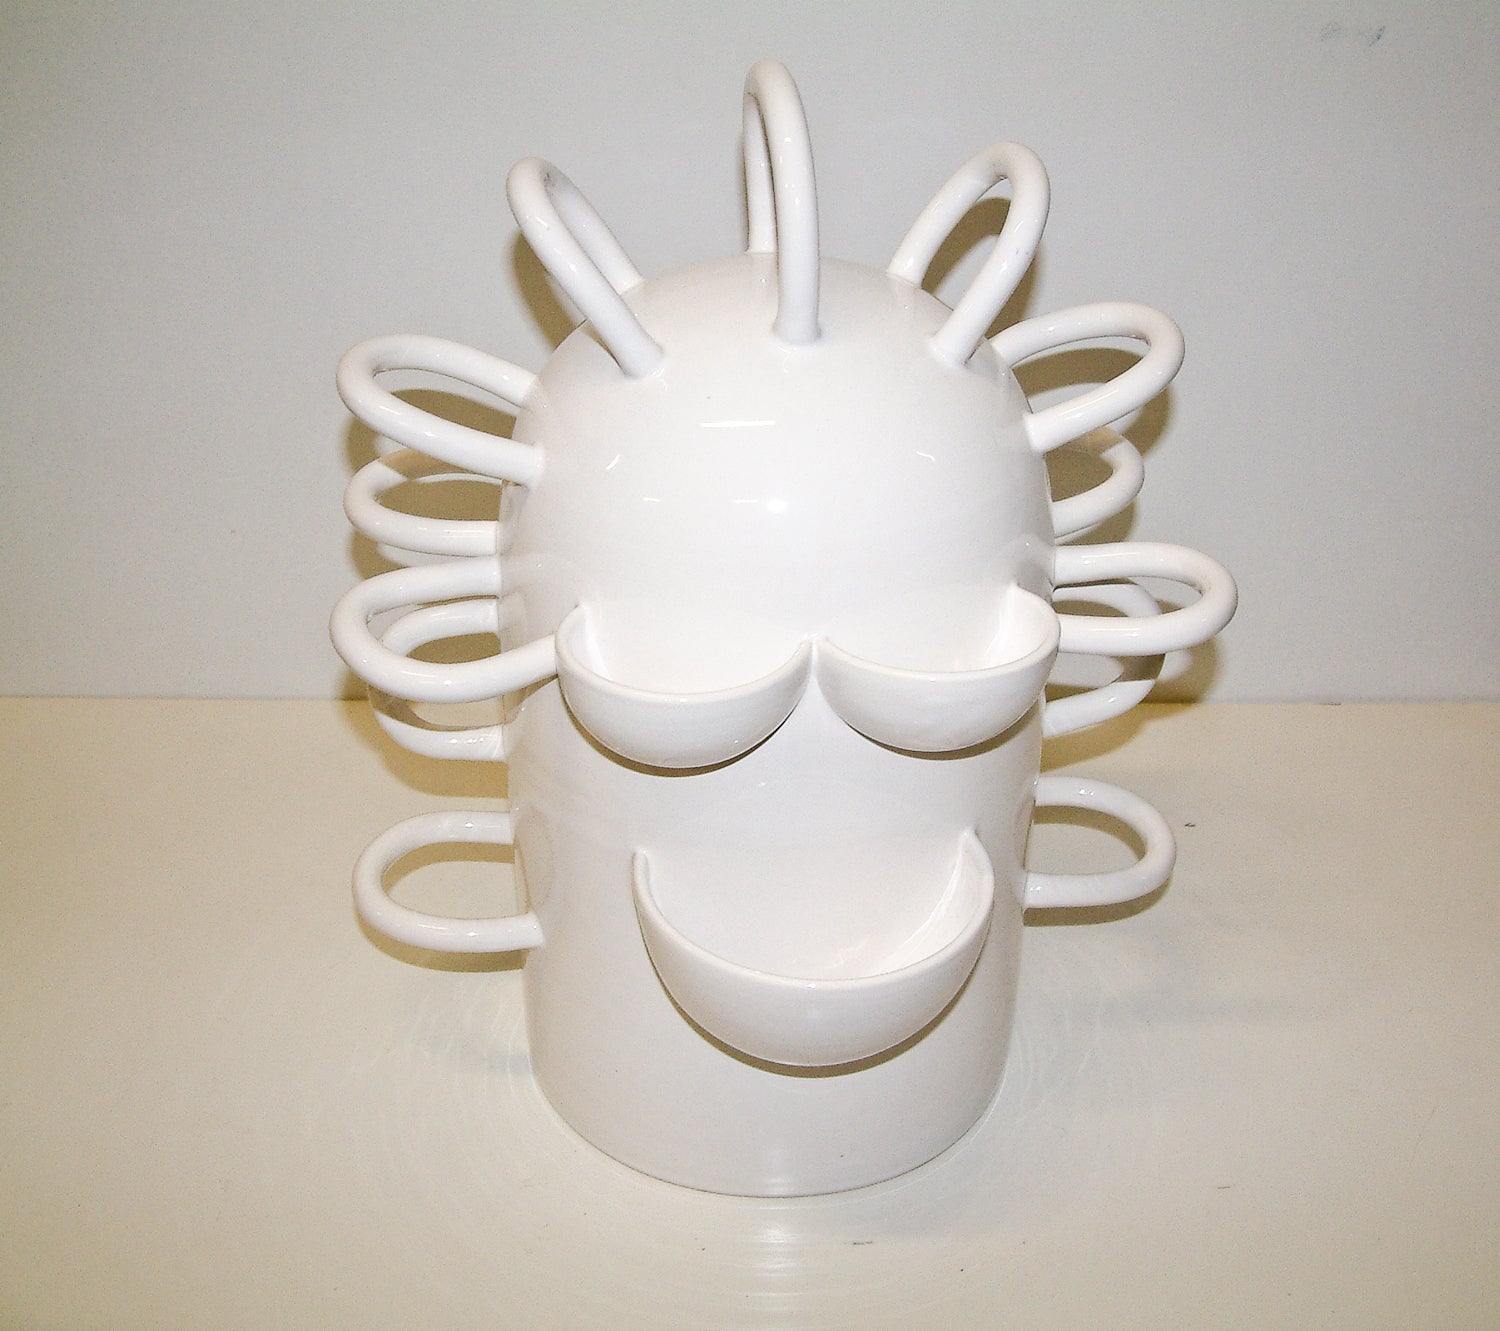 Florence Doleac for Radi Designers "Le Robot" Ceramic Fruit Bowl For Sale